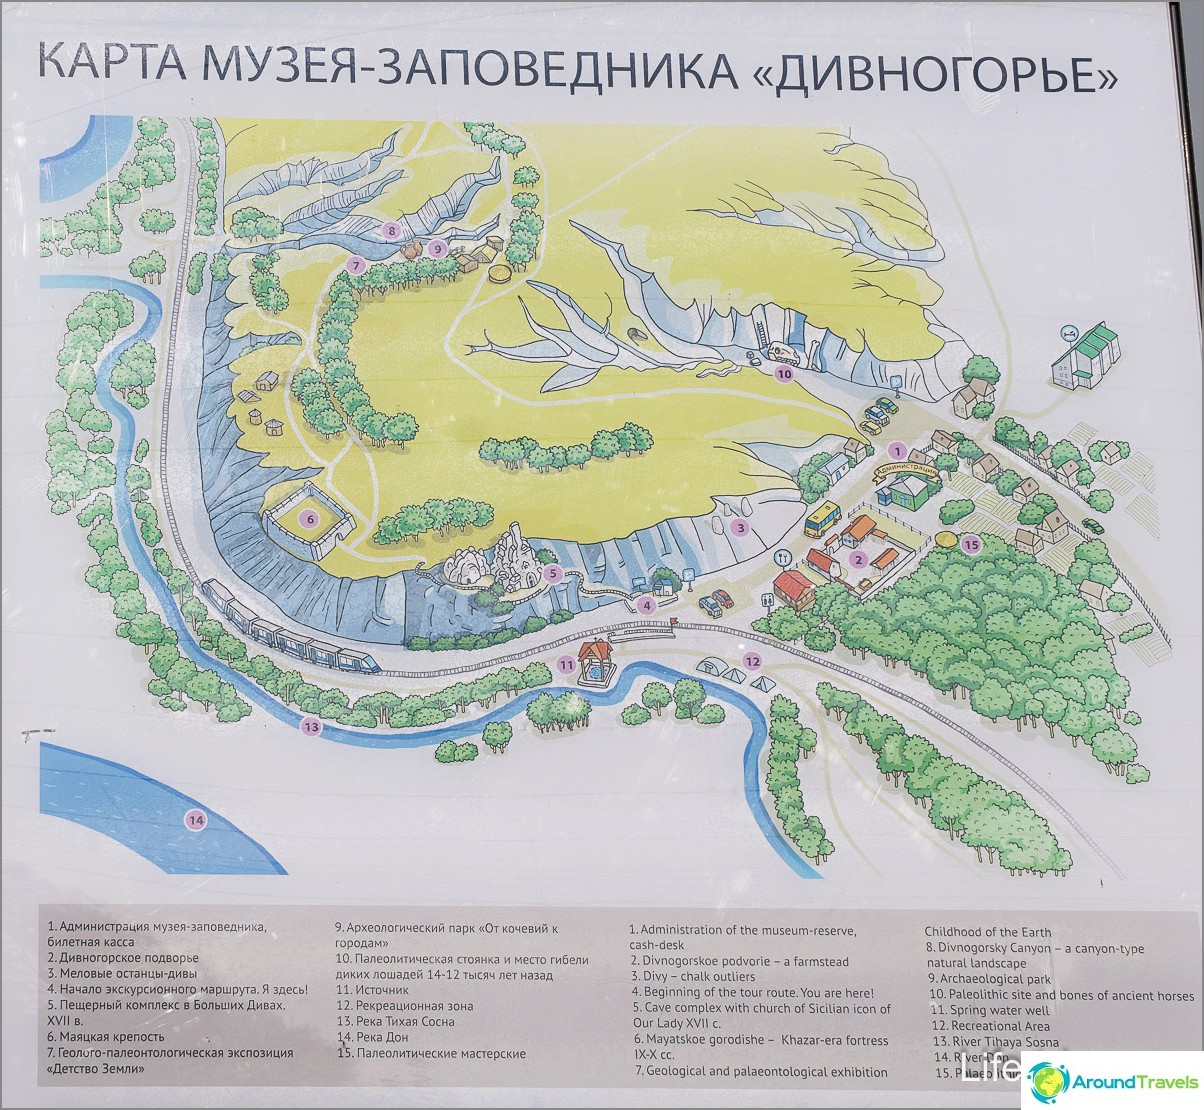 Mapa rezerwatu muzealnego Divnogorye